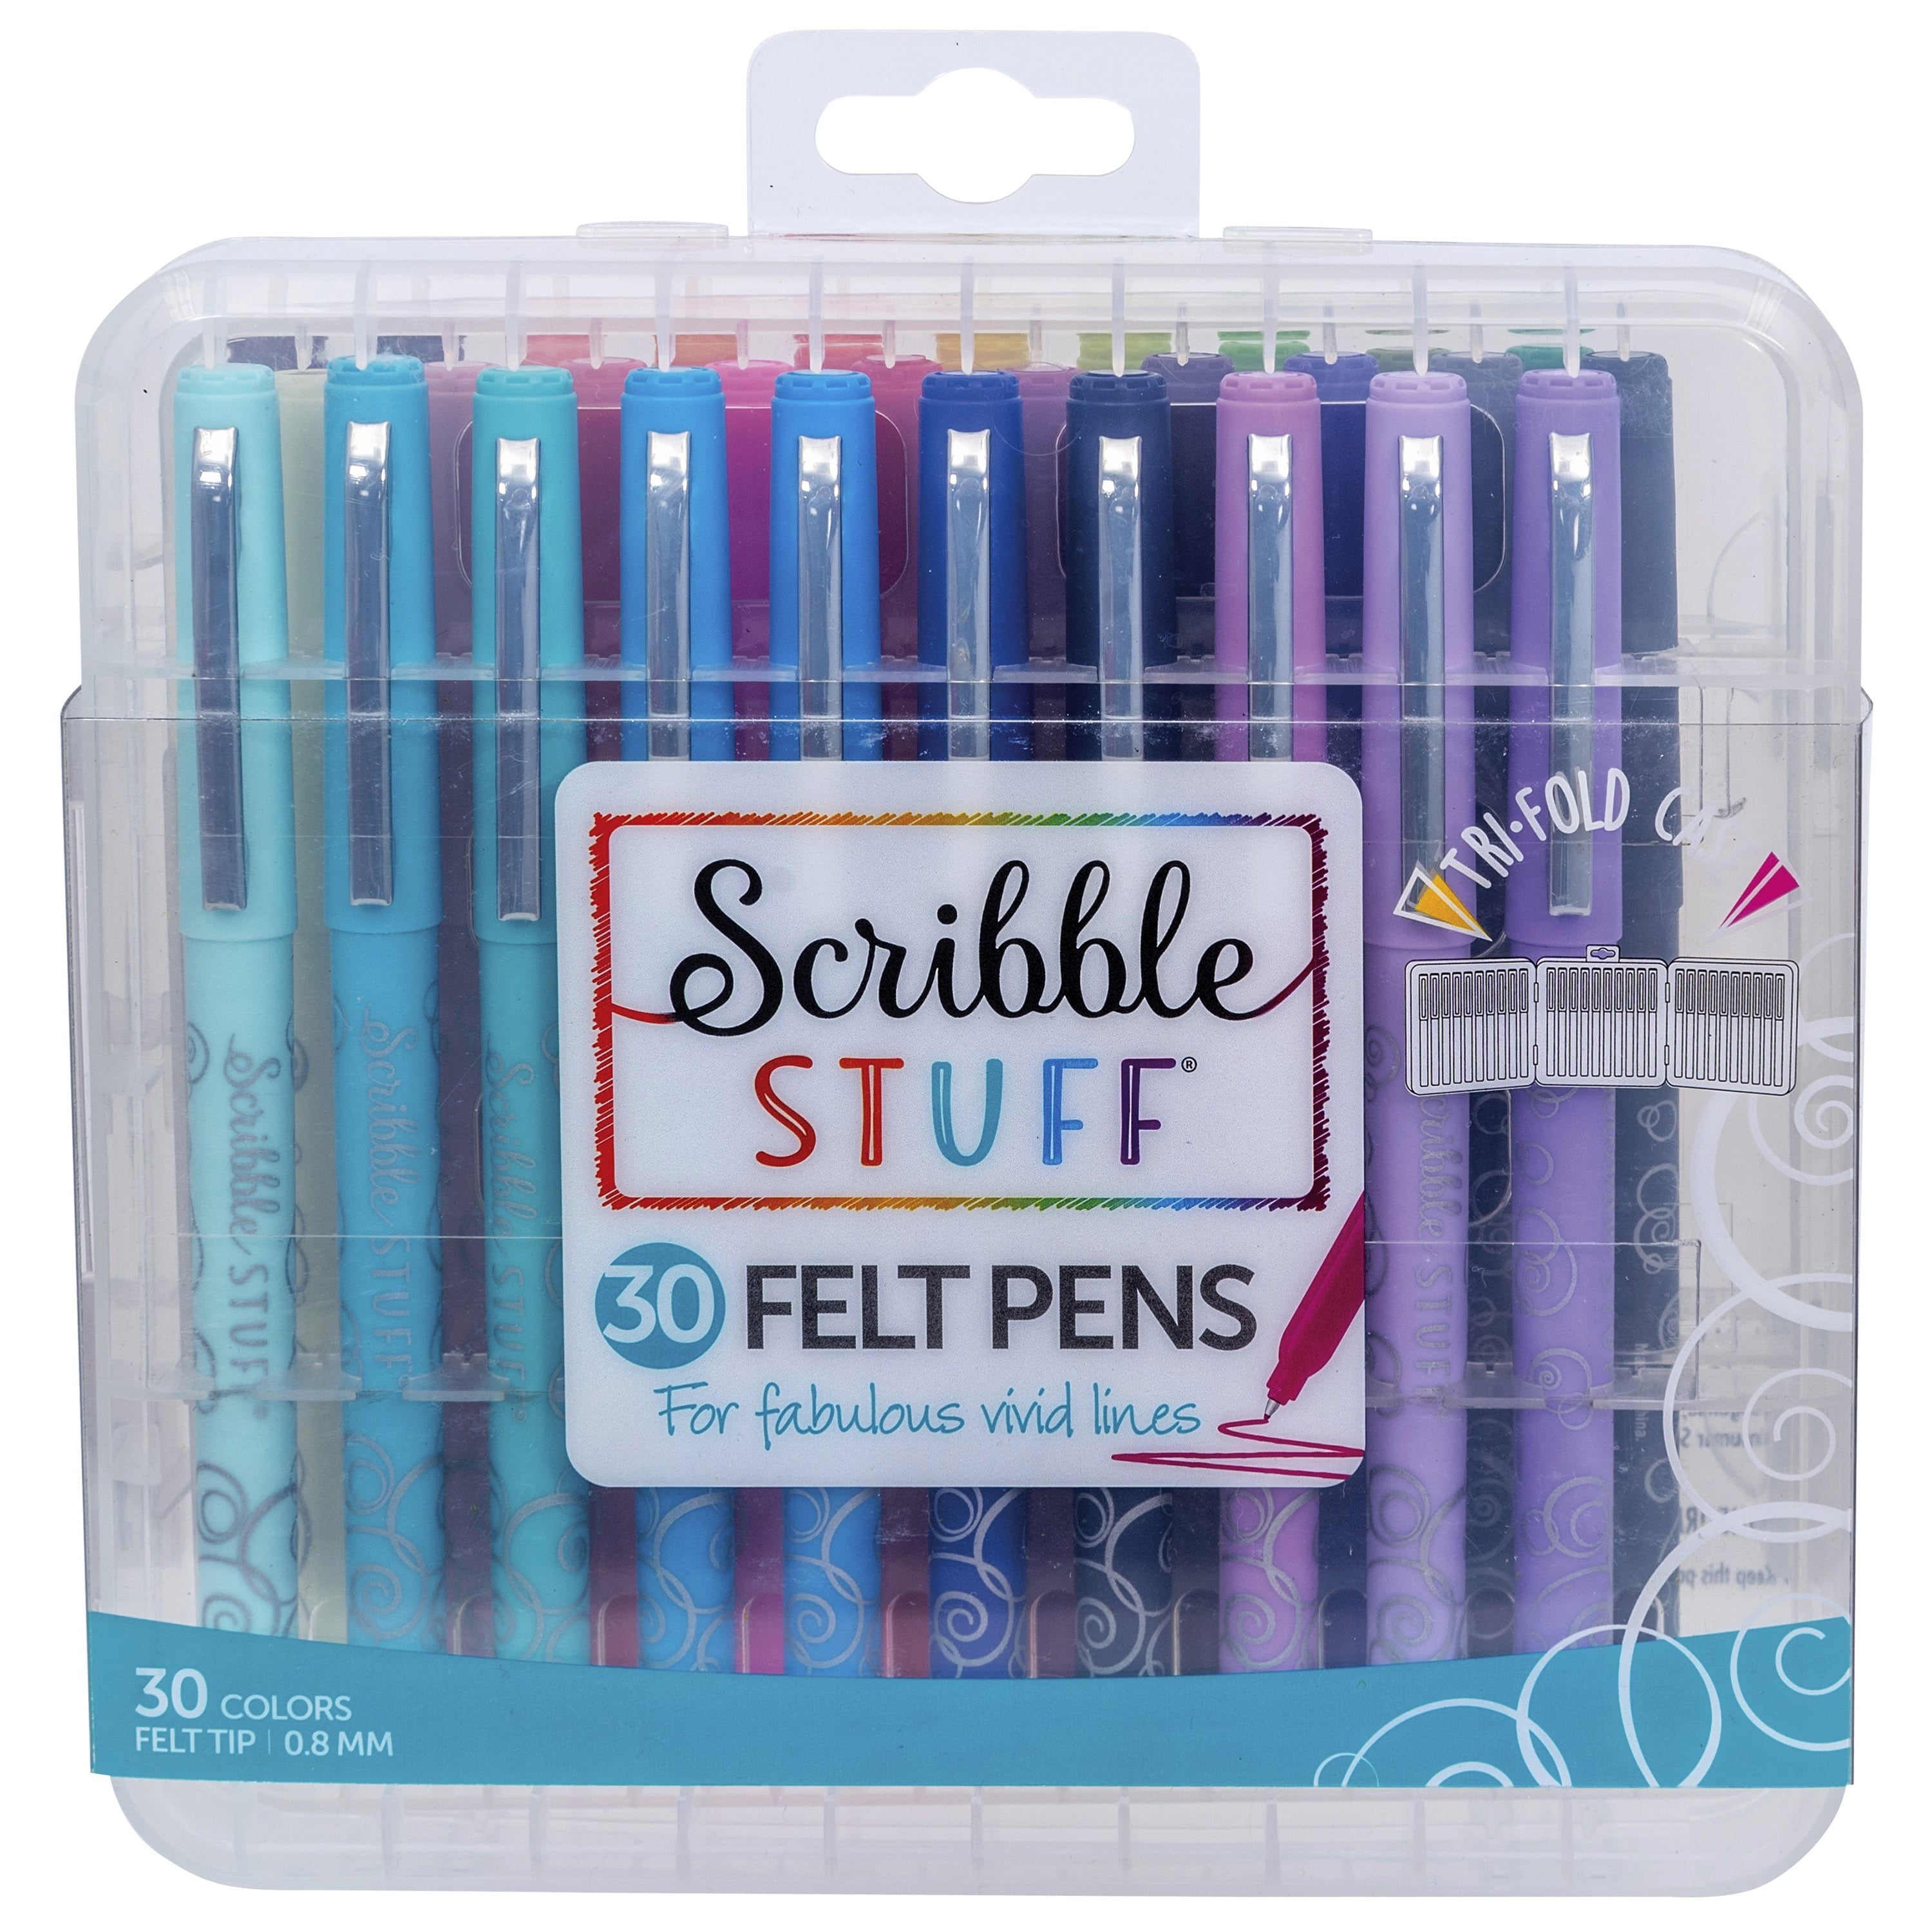 Scribble Stuff 24 Count Porous Pens